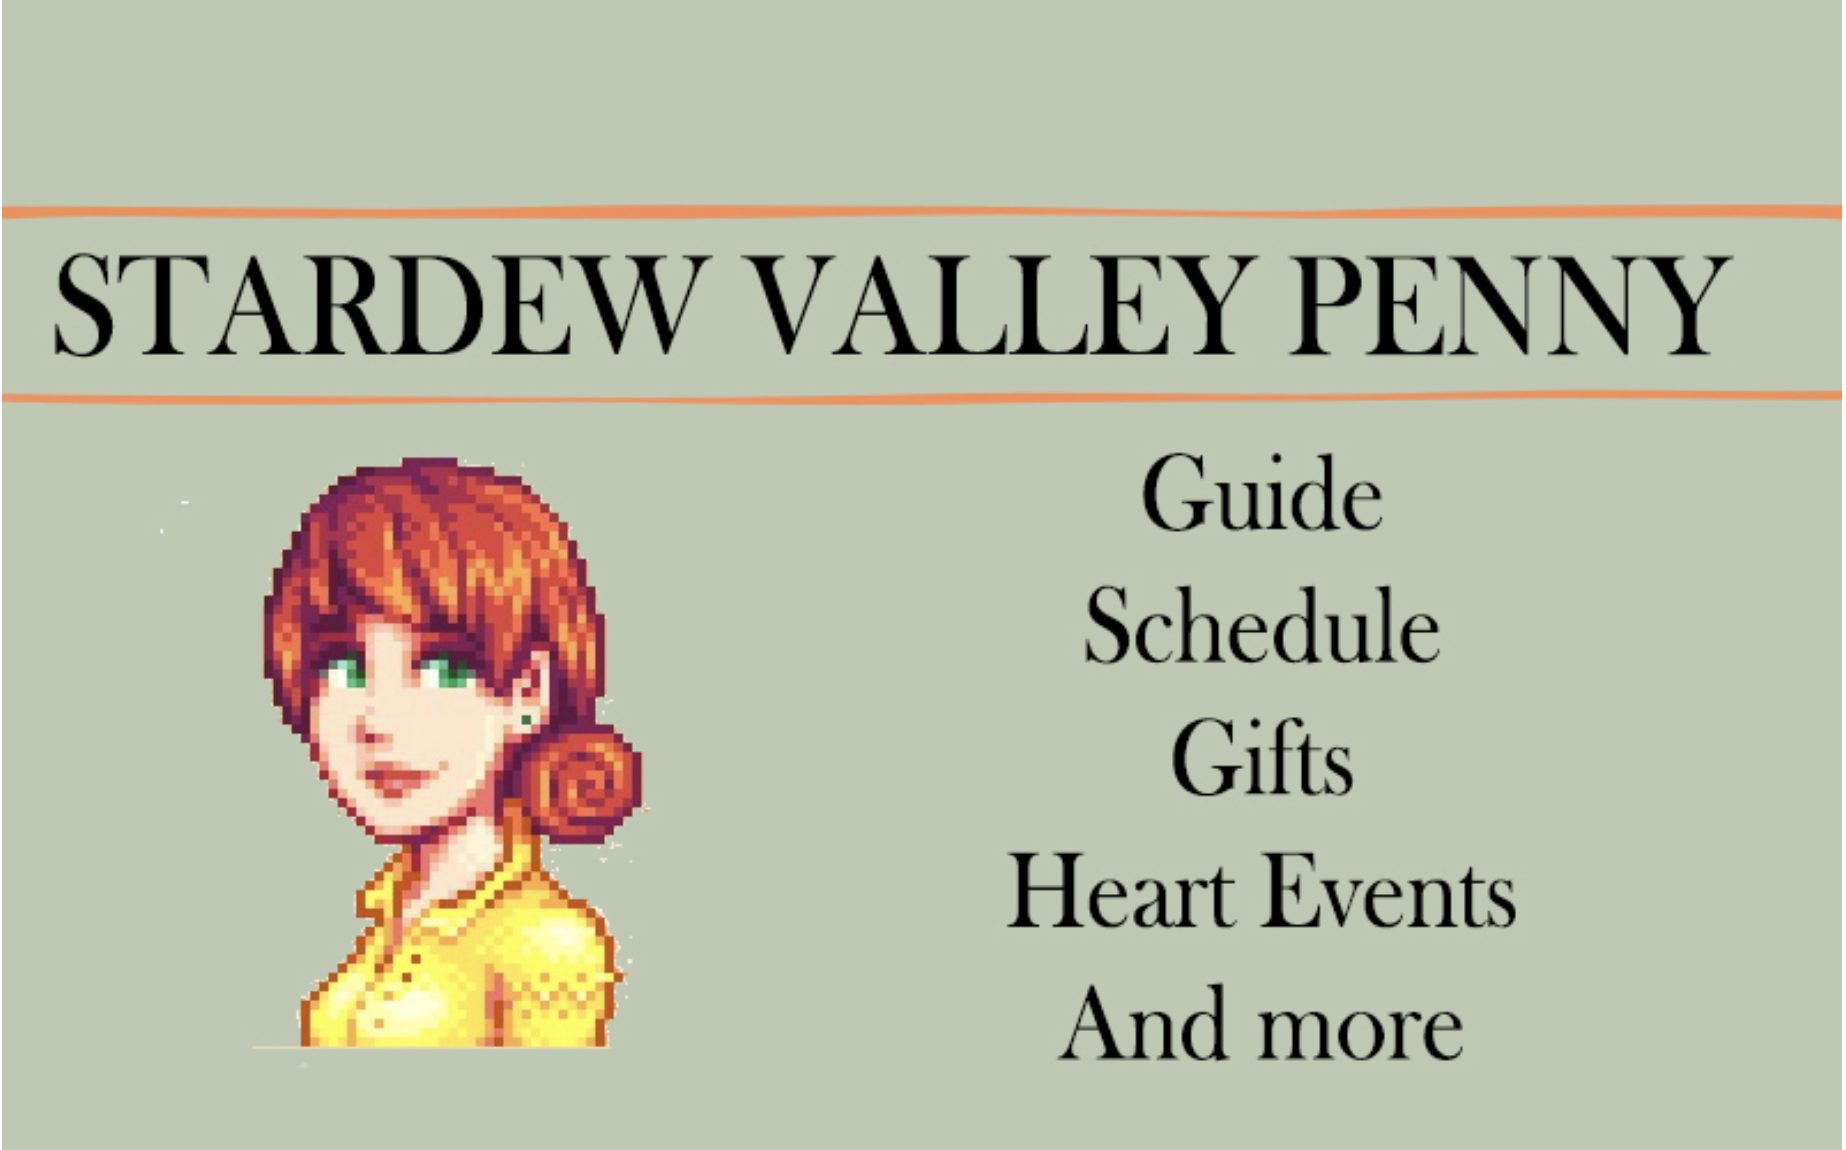 Stardew Valley Penny